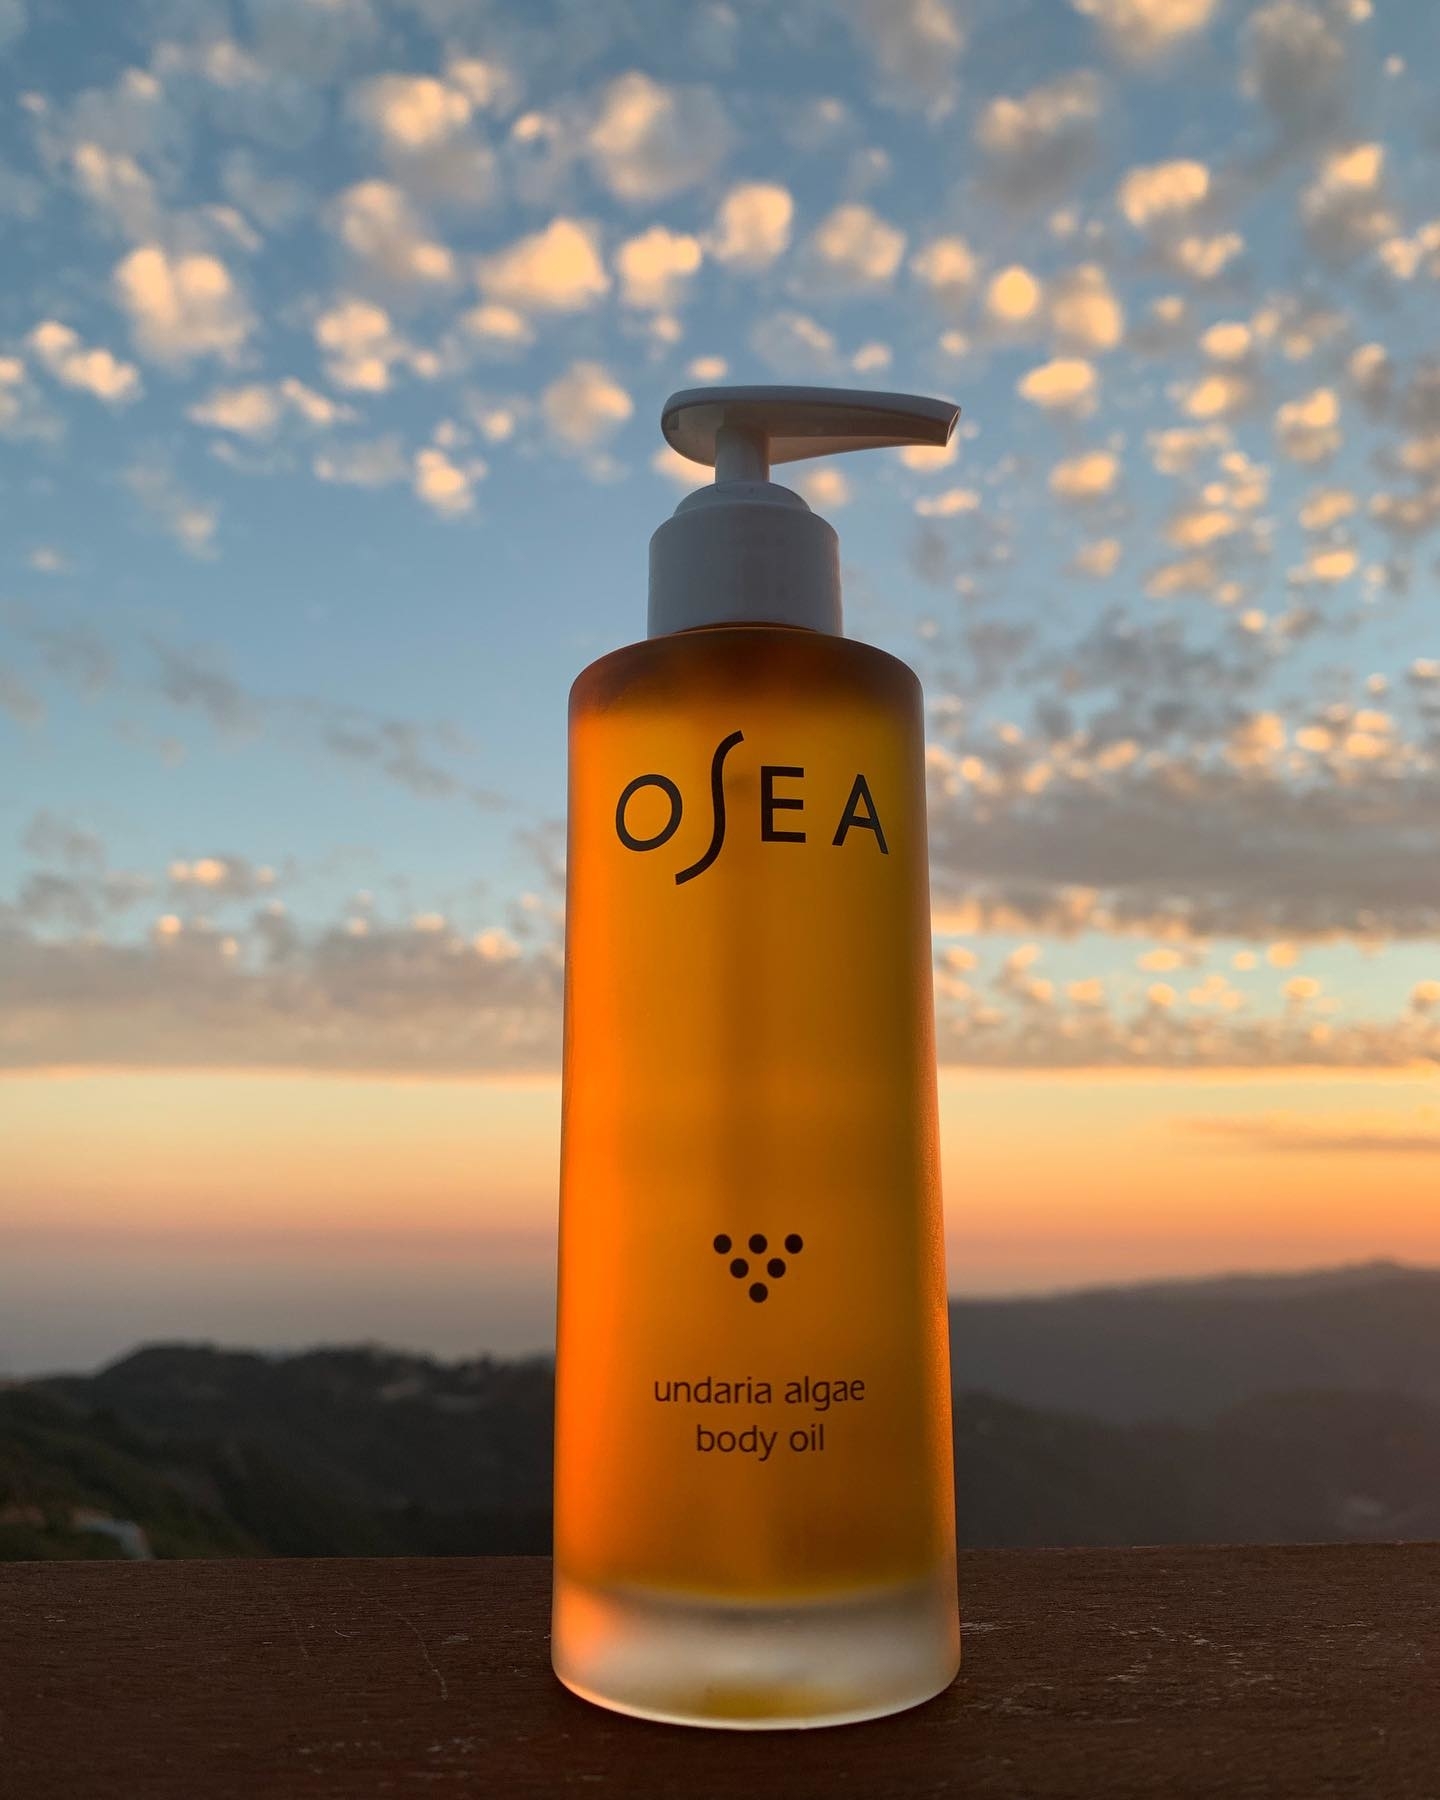 OSEA body oil bottle in front of a sunset sky